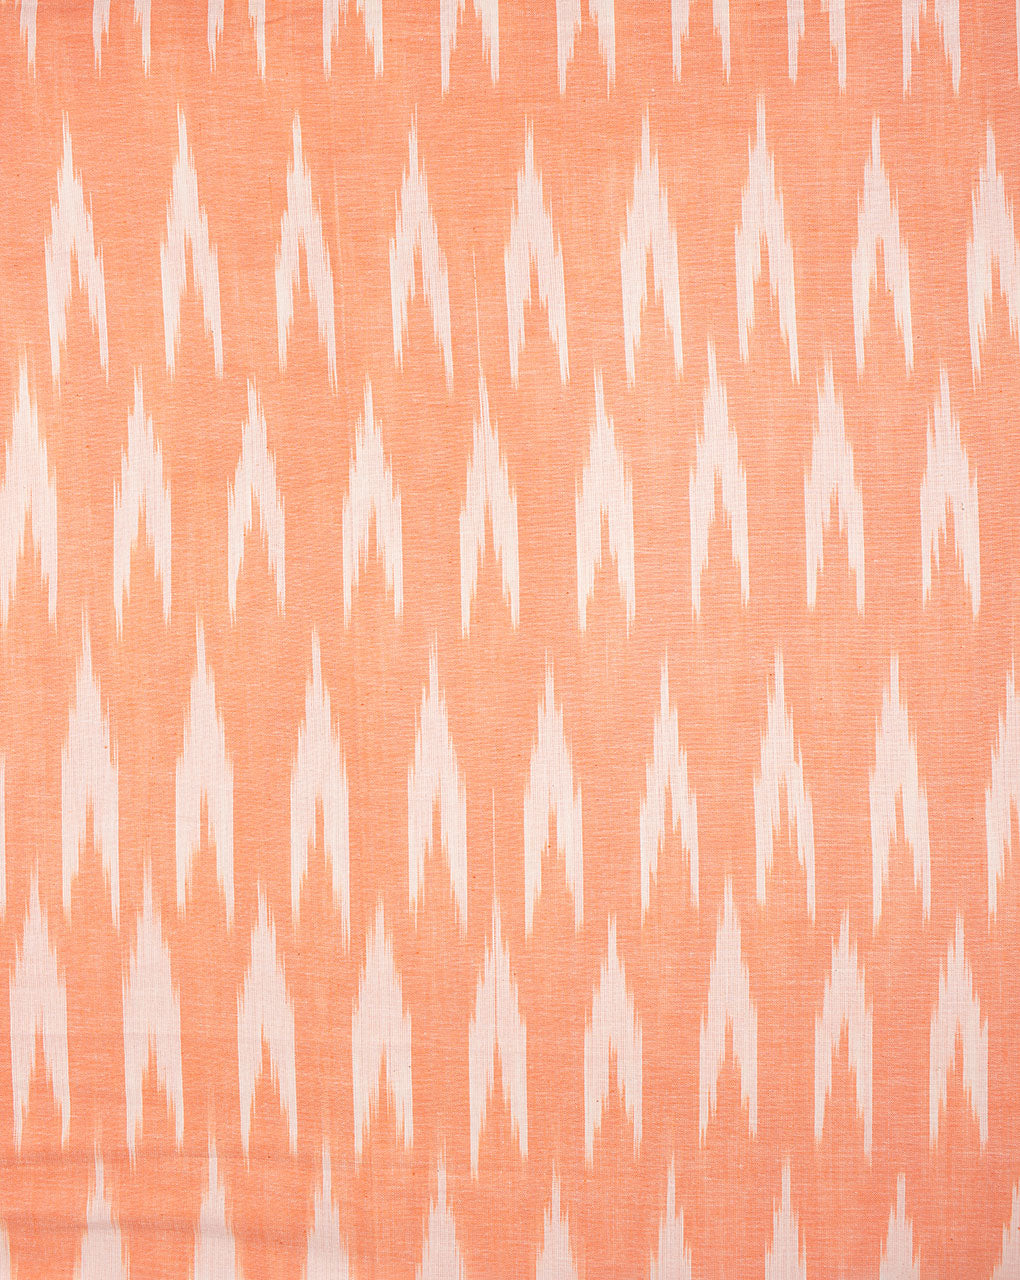 Woven Ikat Cotton Fabric - Fabriclore.com